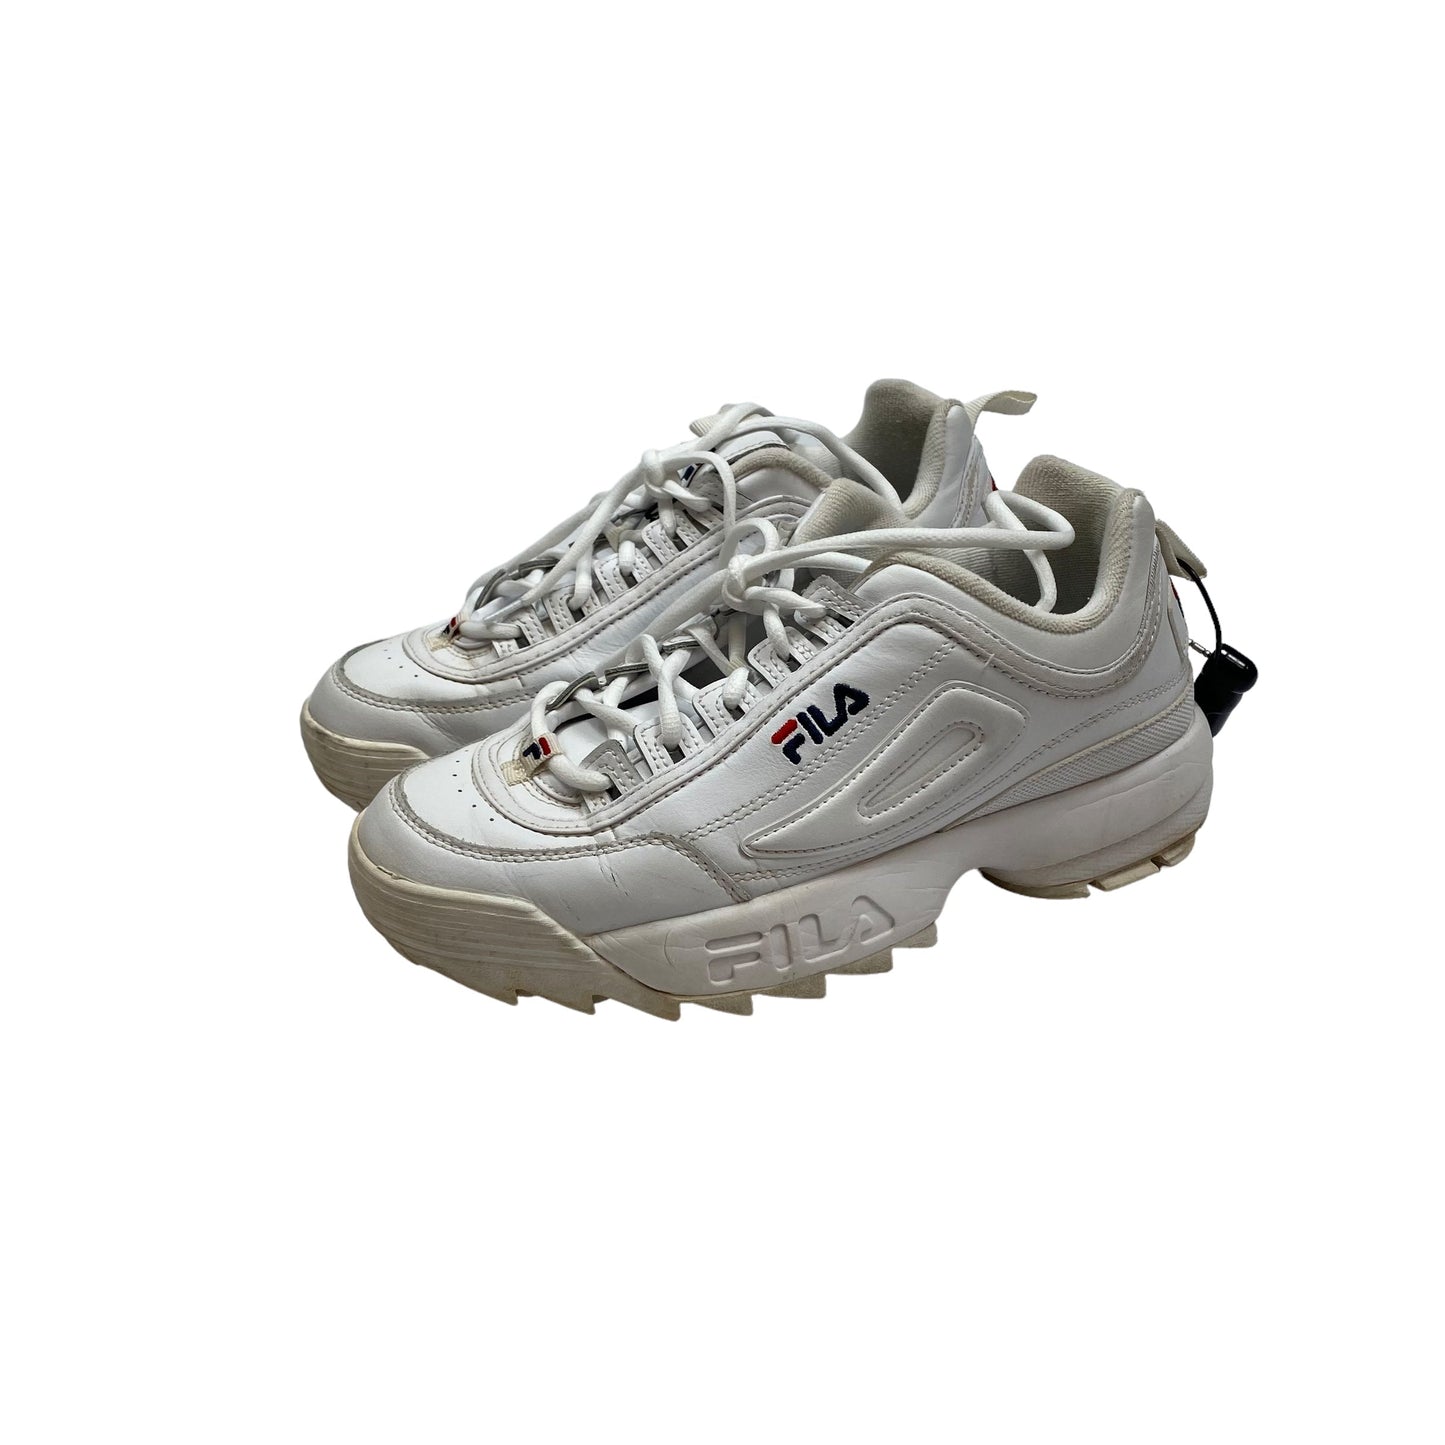 White Shoes Athletic Fila, Size 9